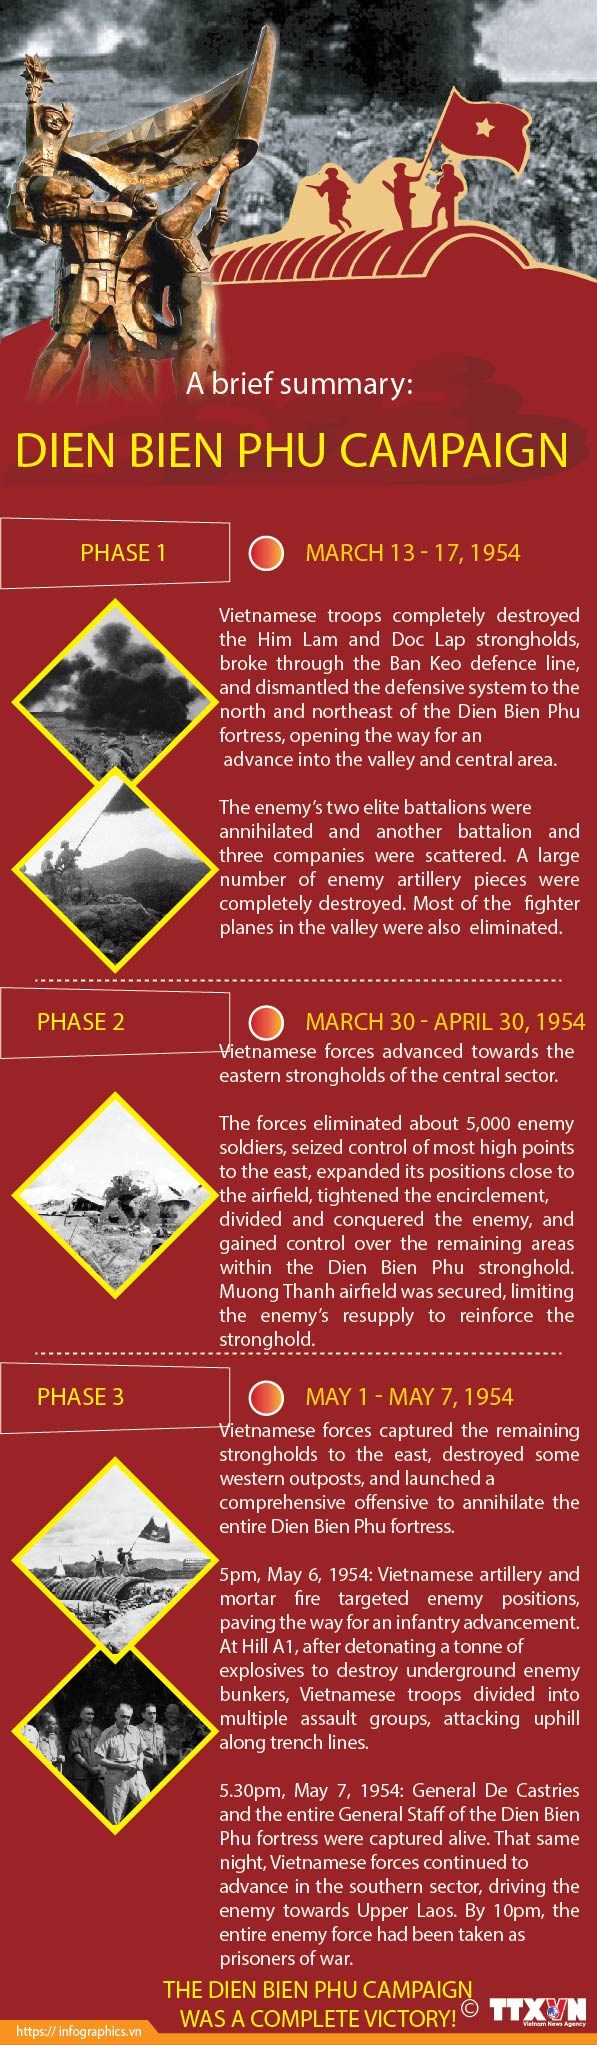 Dien Bien Phu Campaign: A brief summary hinh anh 1